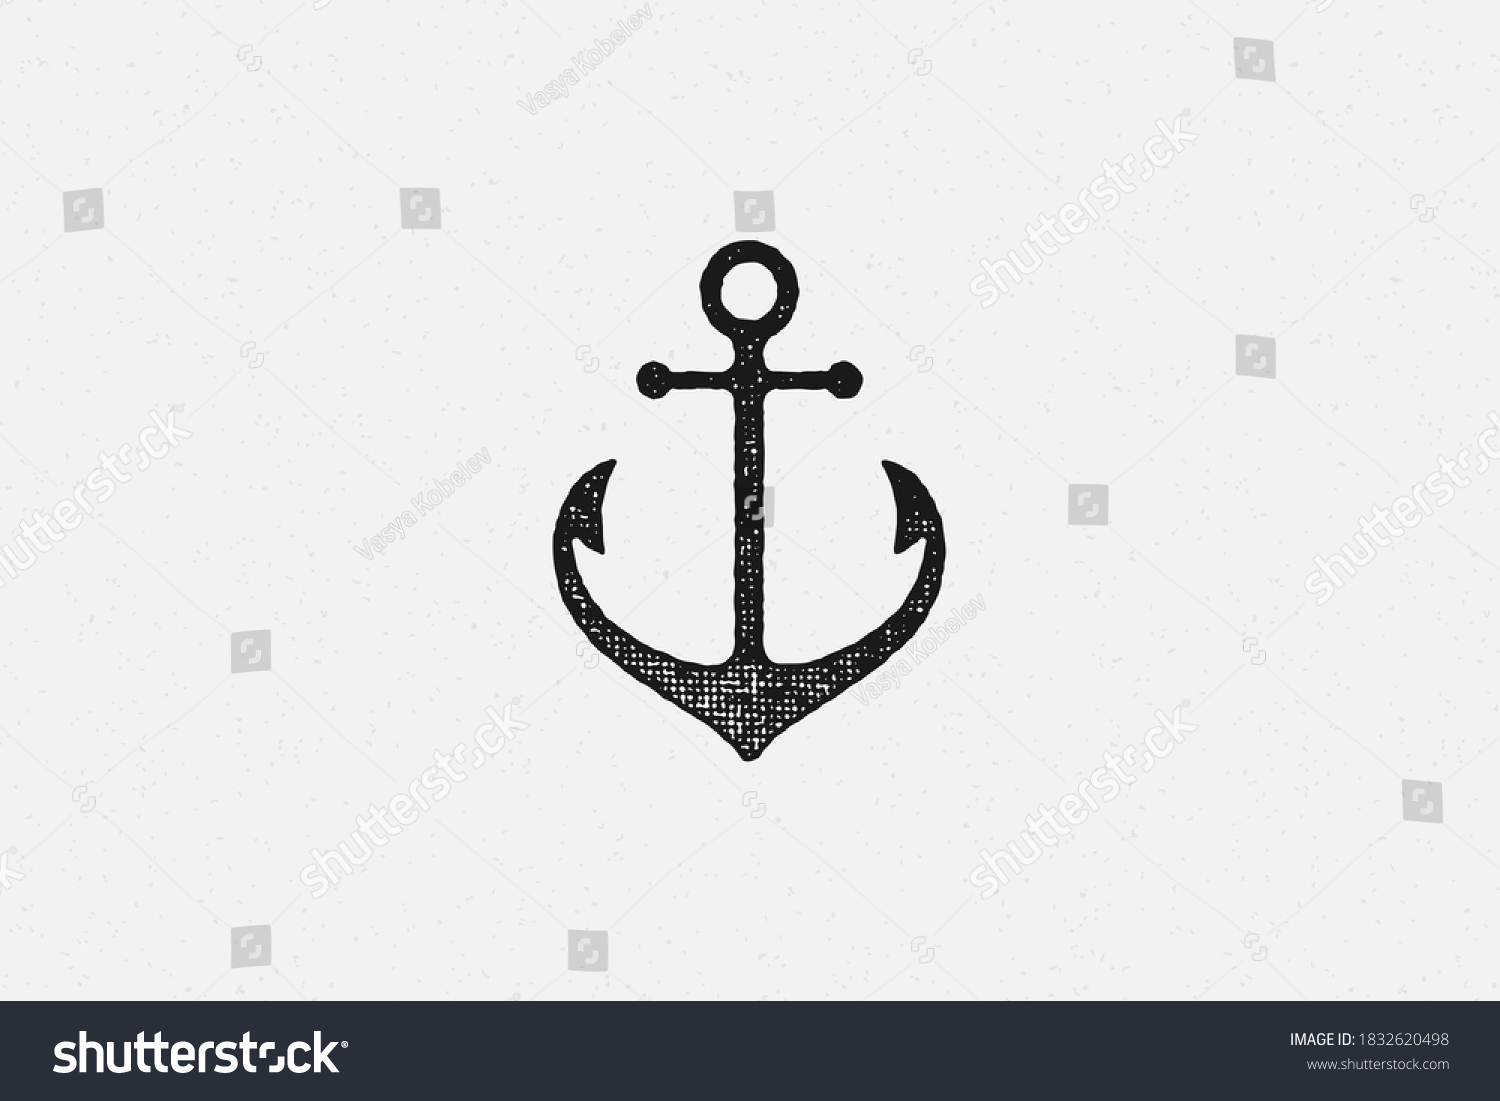 SVG of Black silhouette traditional anchor emblem of maritime industry hand drawn stamp effect vector illustration. Vintage grunge texture on old paper for poster or label decoration. svg